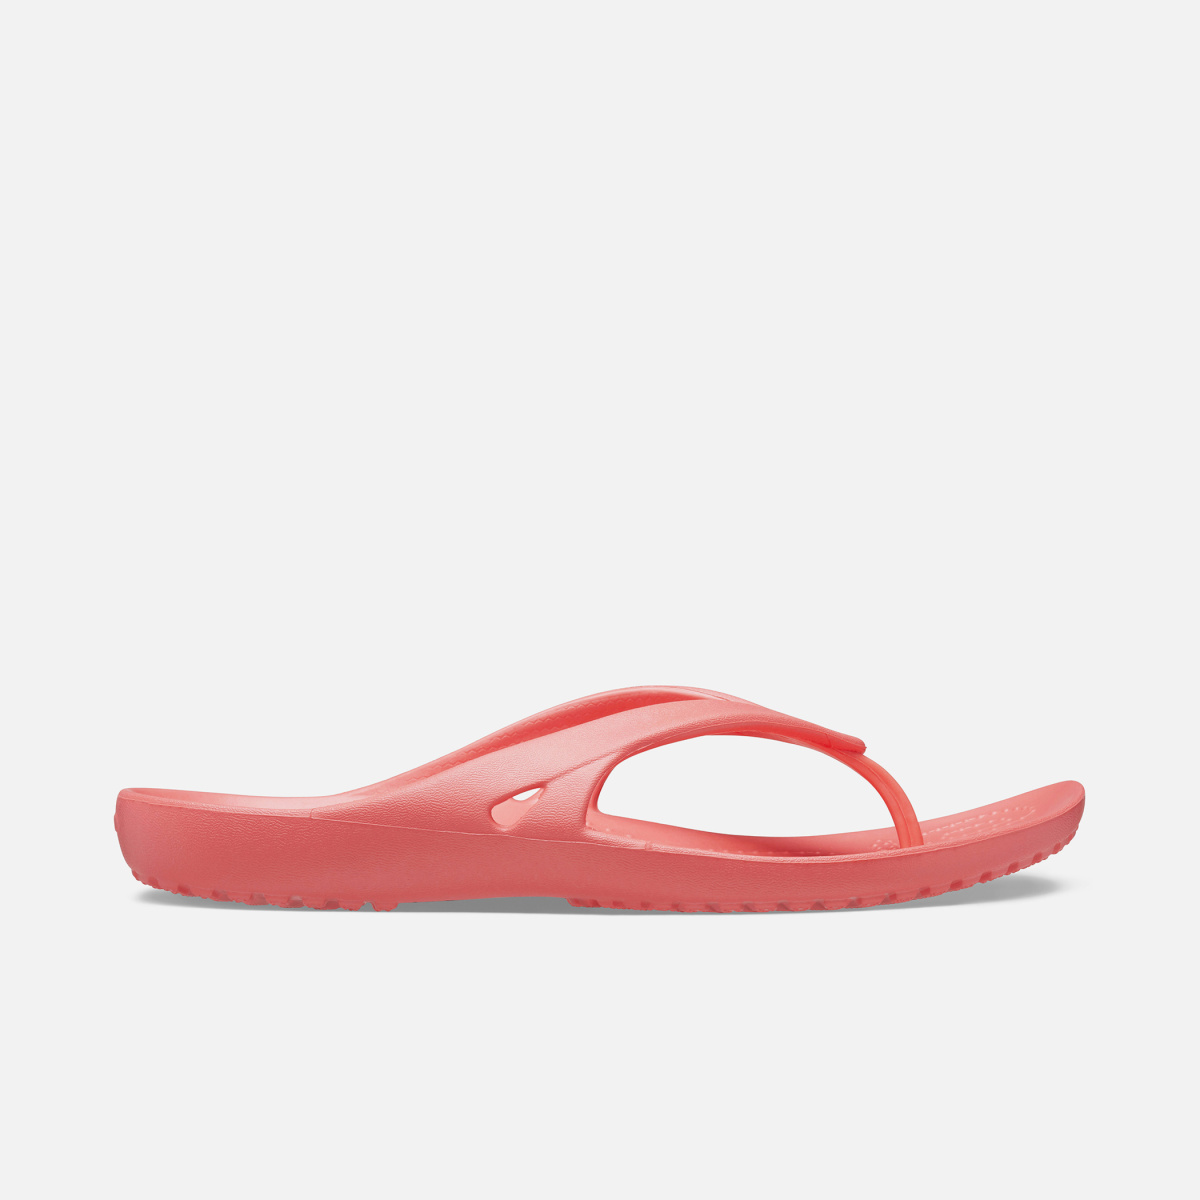 New Crocs slippers for women for all seasons slippers | Lazada PH-thanhphatduhoc.com.vn